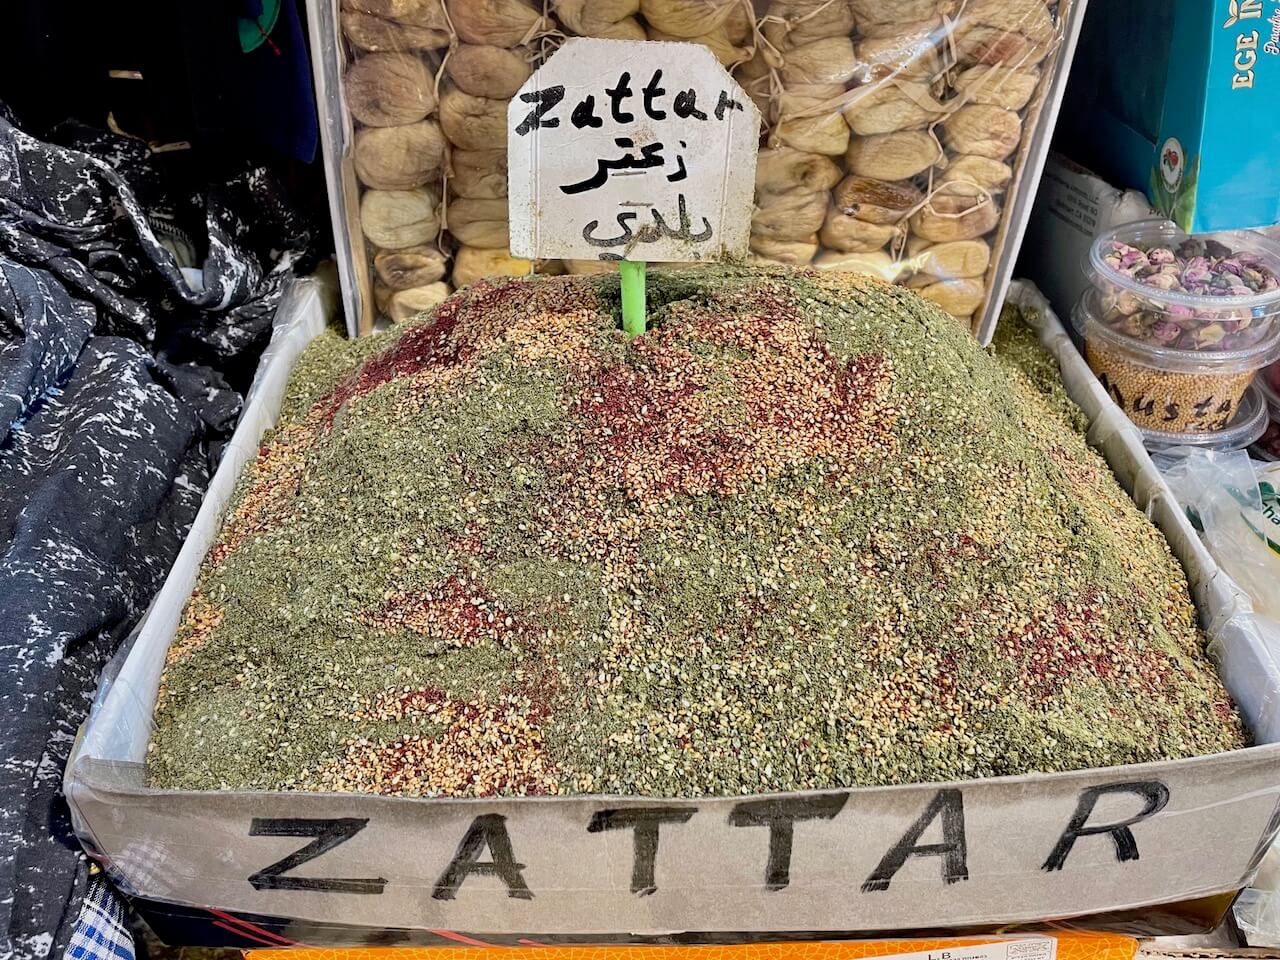 Israel, Jerusalem - Za'atar spice